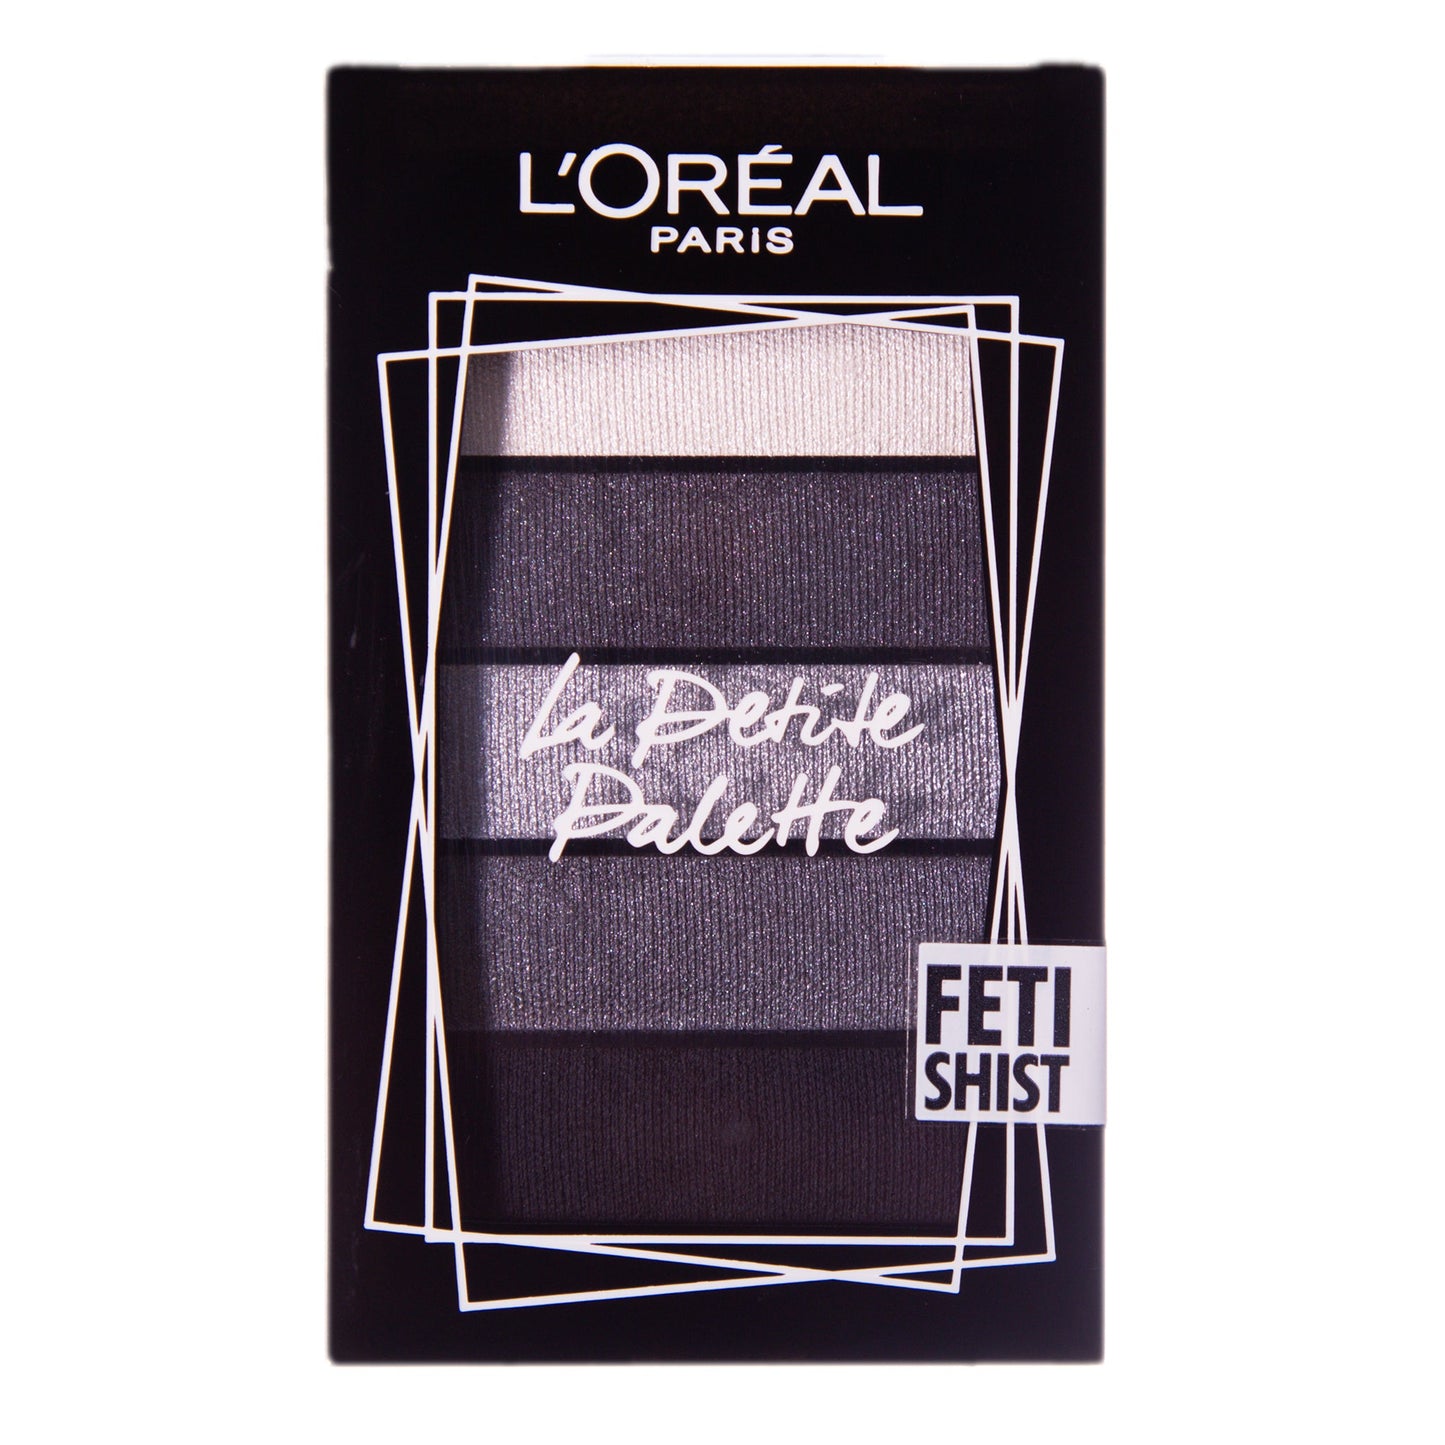 L'Oreal Paris Mini Eyeshadow Palette - Fetishist